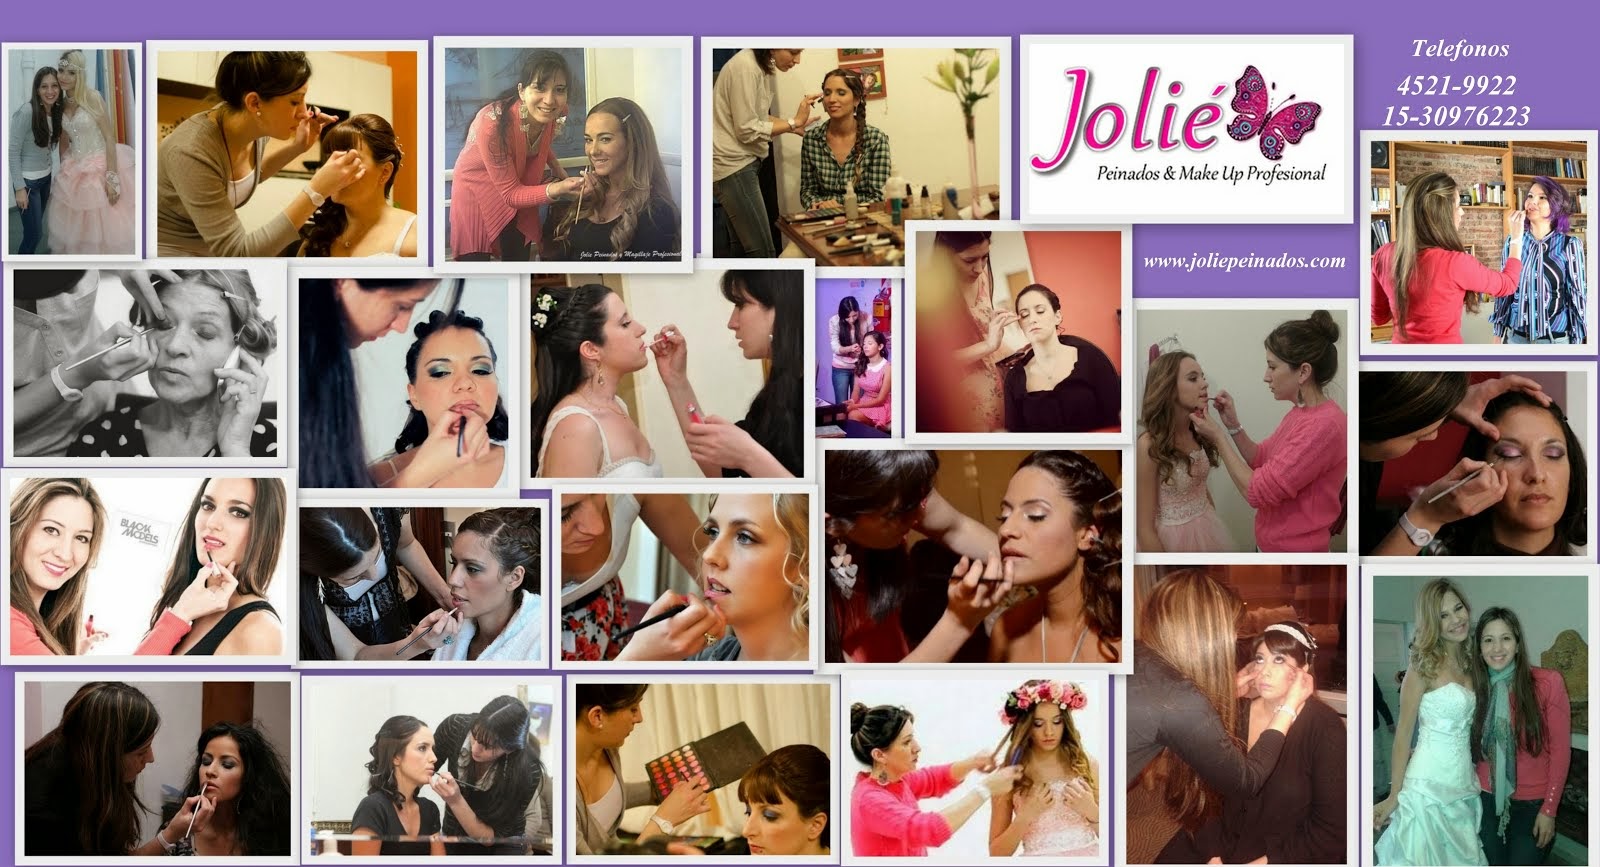 Jolie Peinados y Maquillaje Profesional